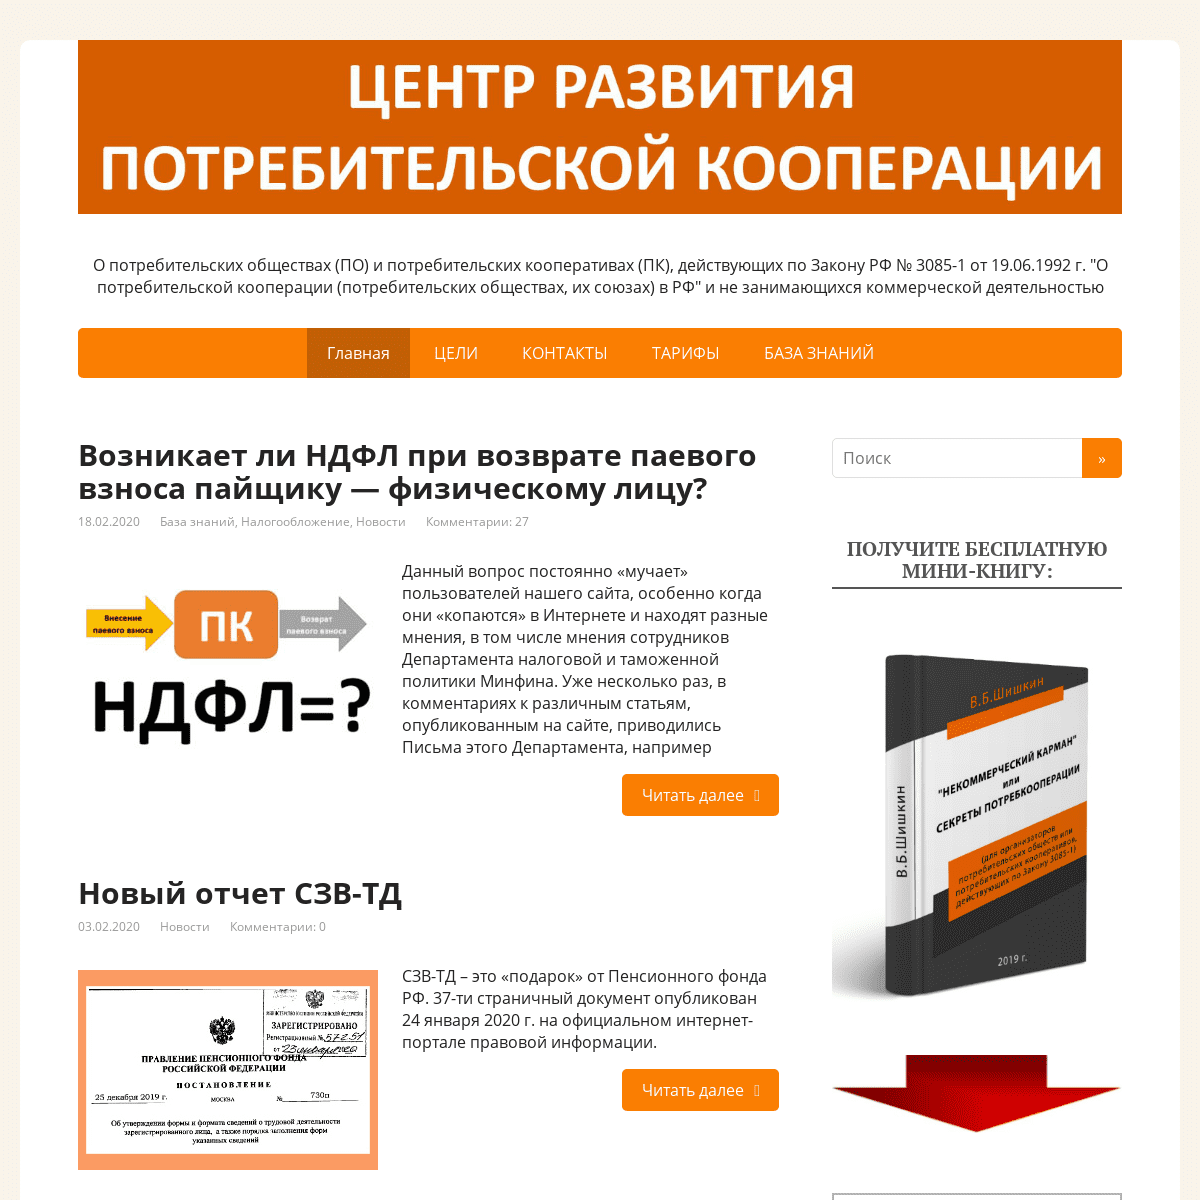 A complete backup of ucpotrebkoop.ru